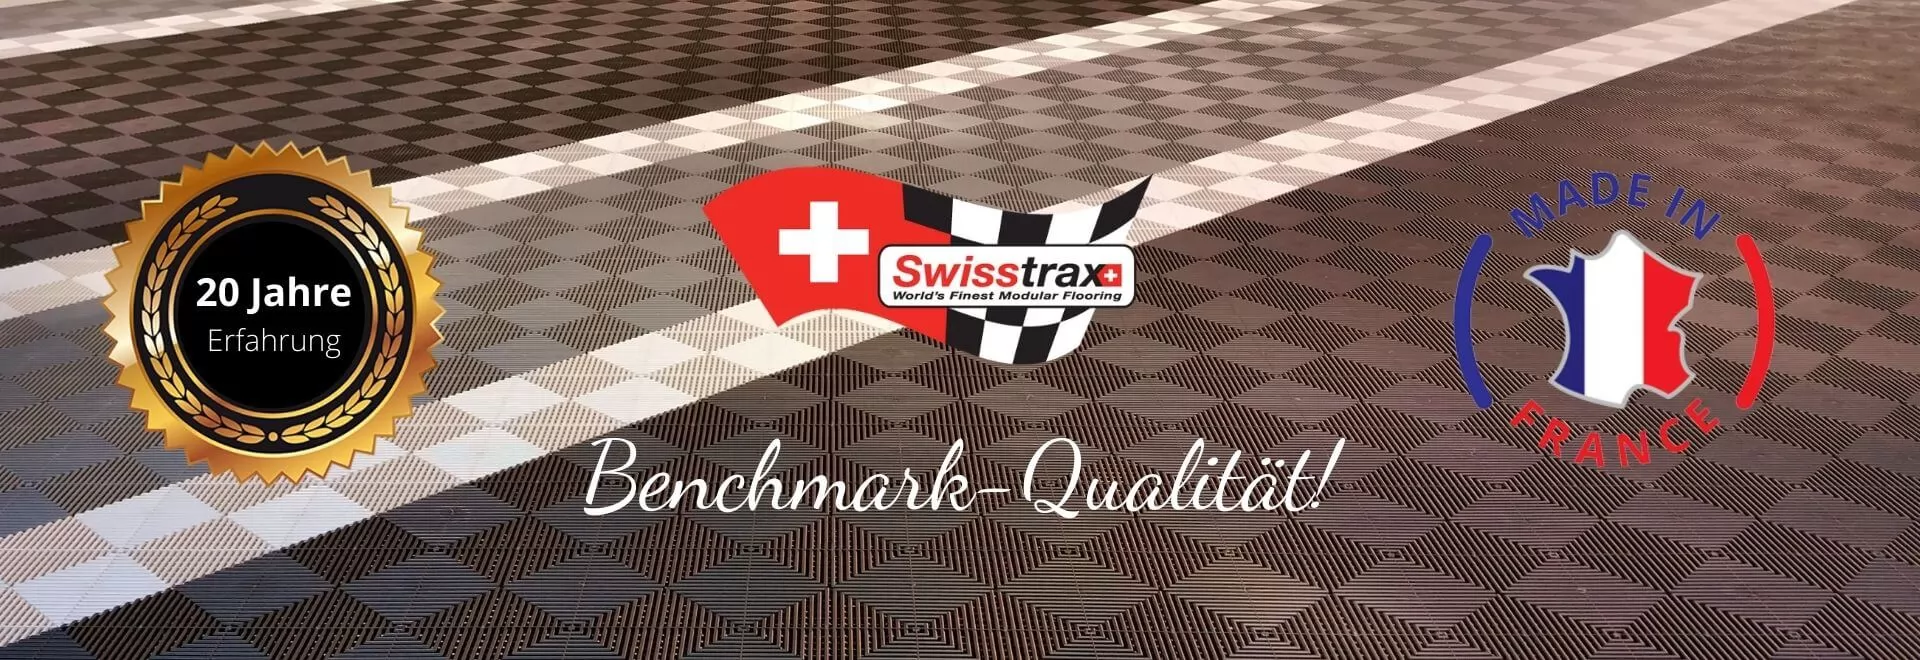 Benchmark-Qualität-swisstrax